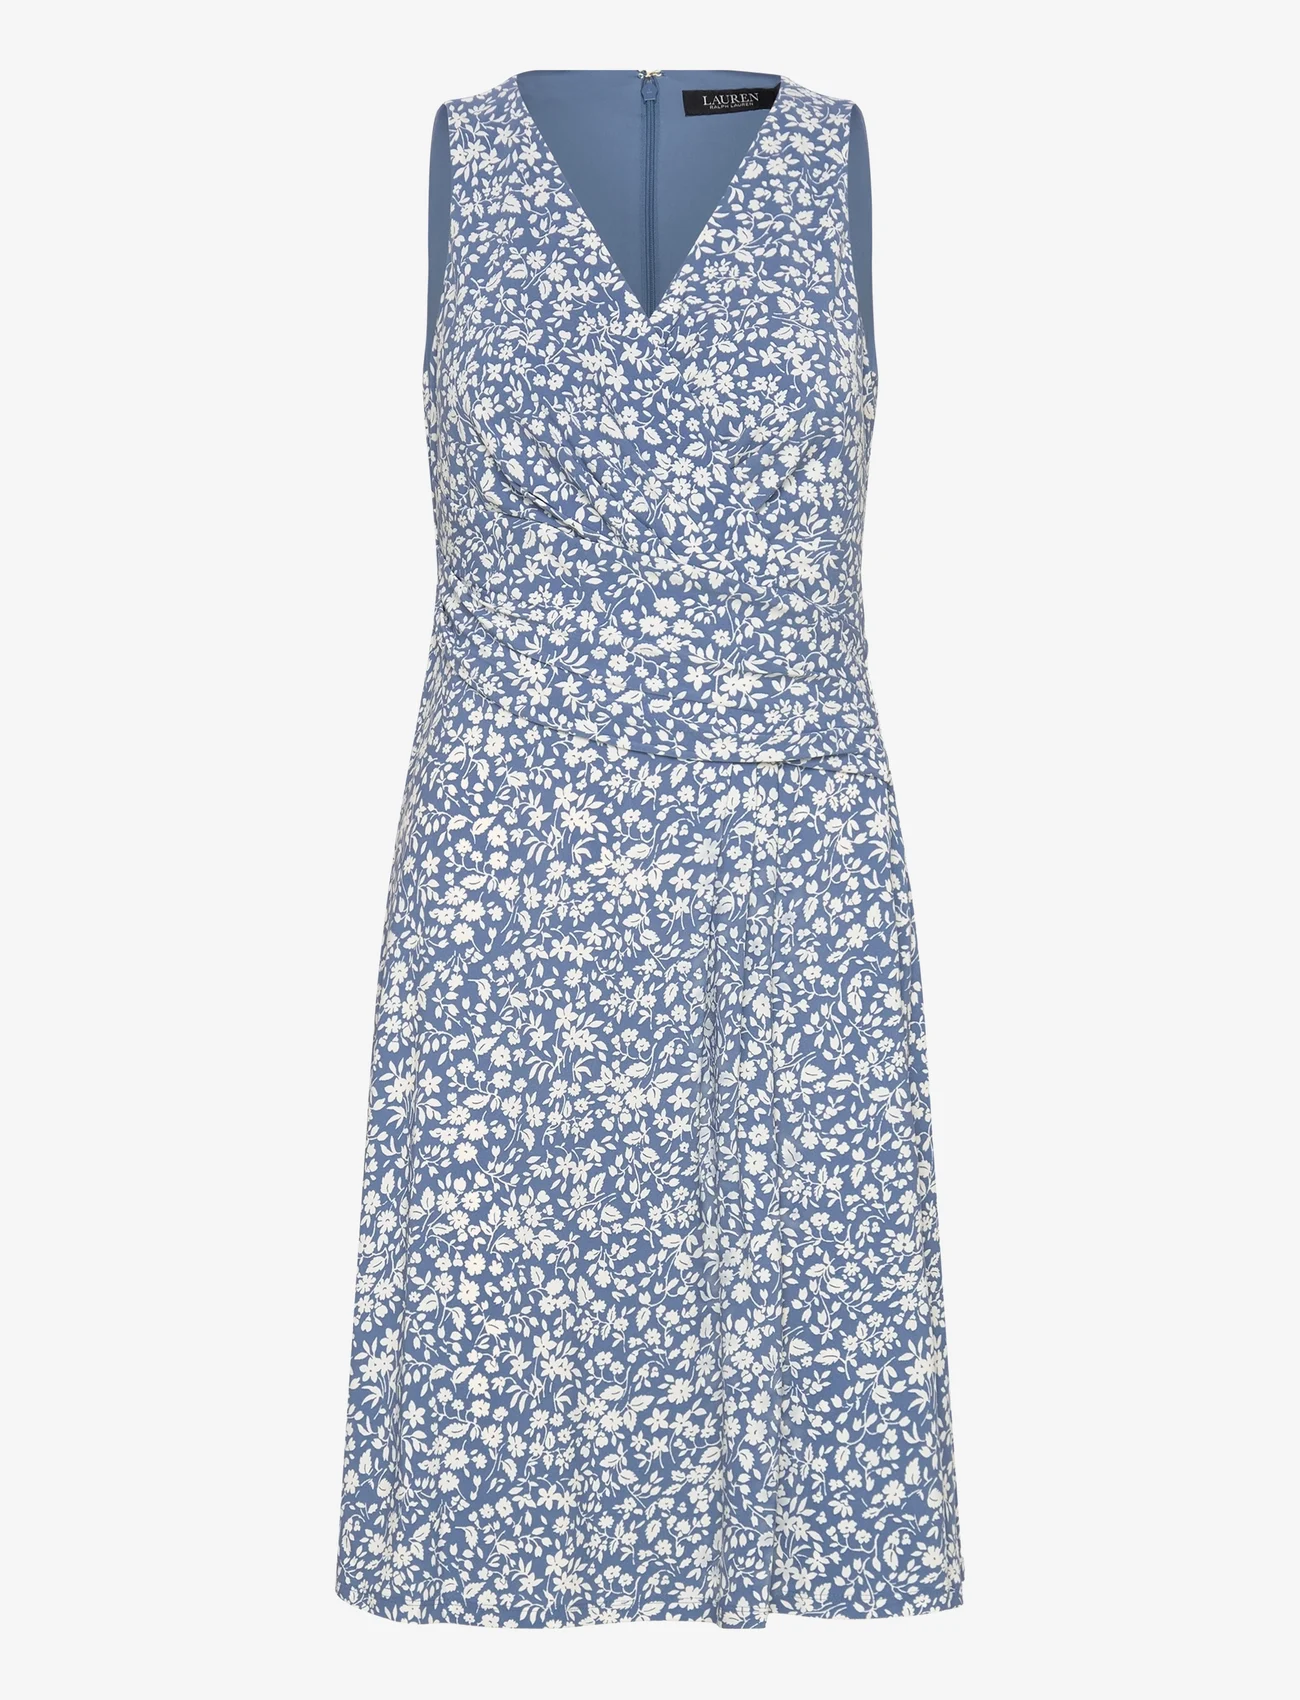 Lauren Ralph Lauren - Floral Surplice Jersey Sleeveless Dress - vasarinės suknelės - blue/cream - 0